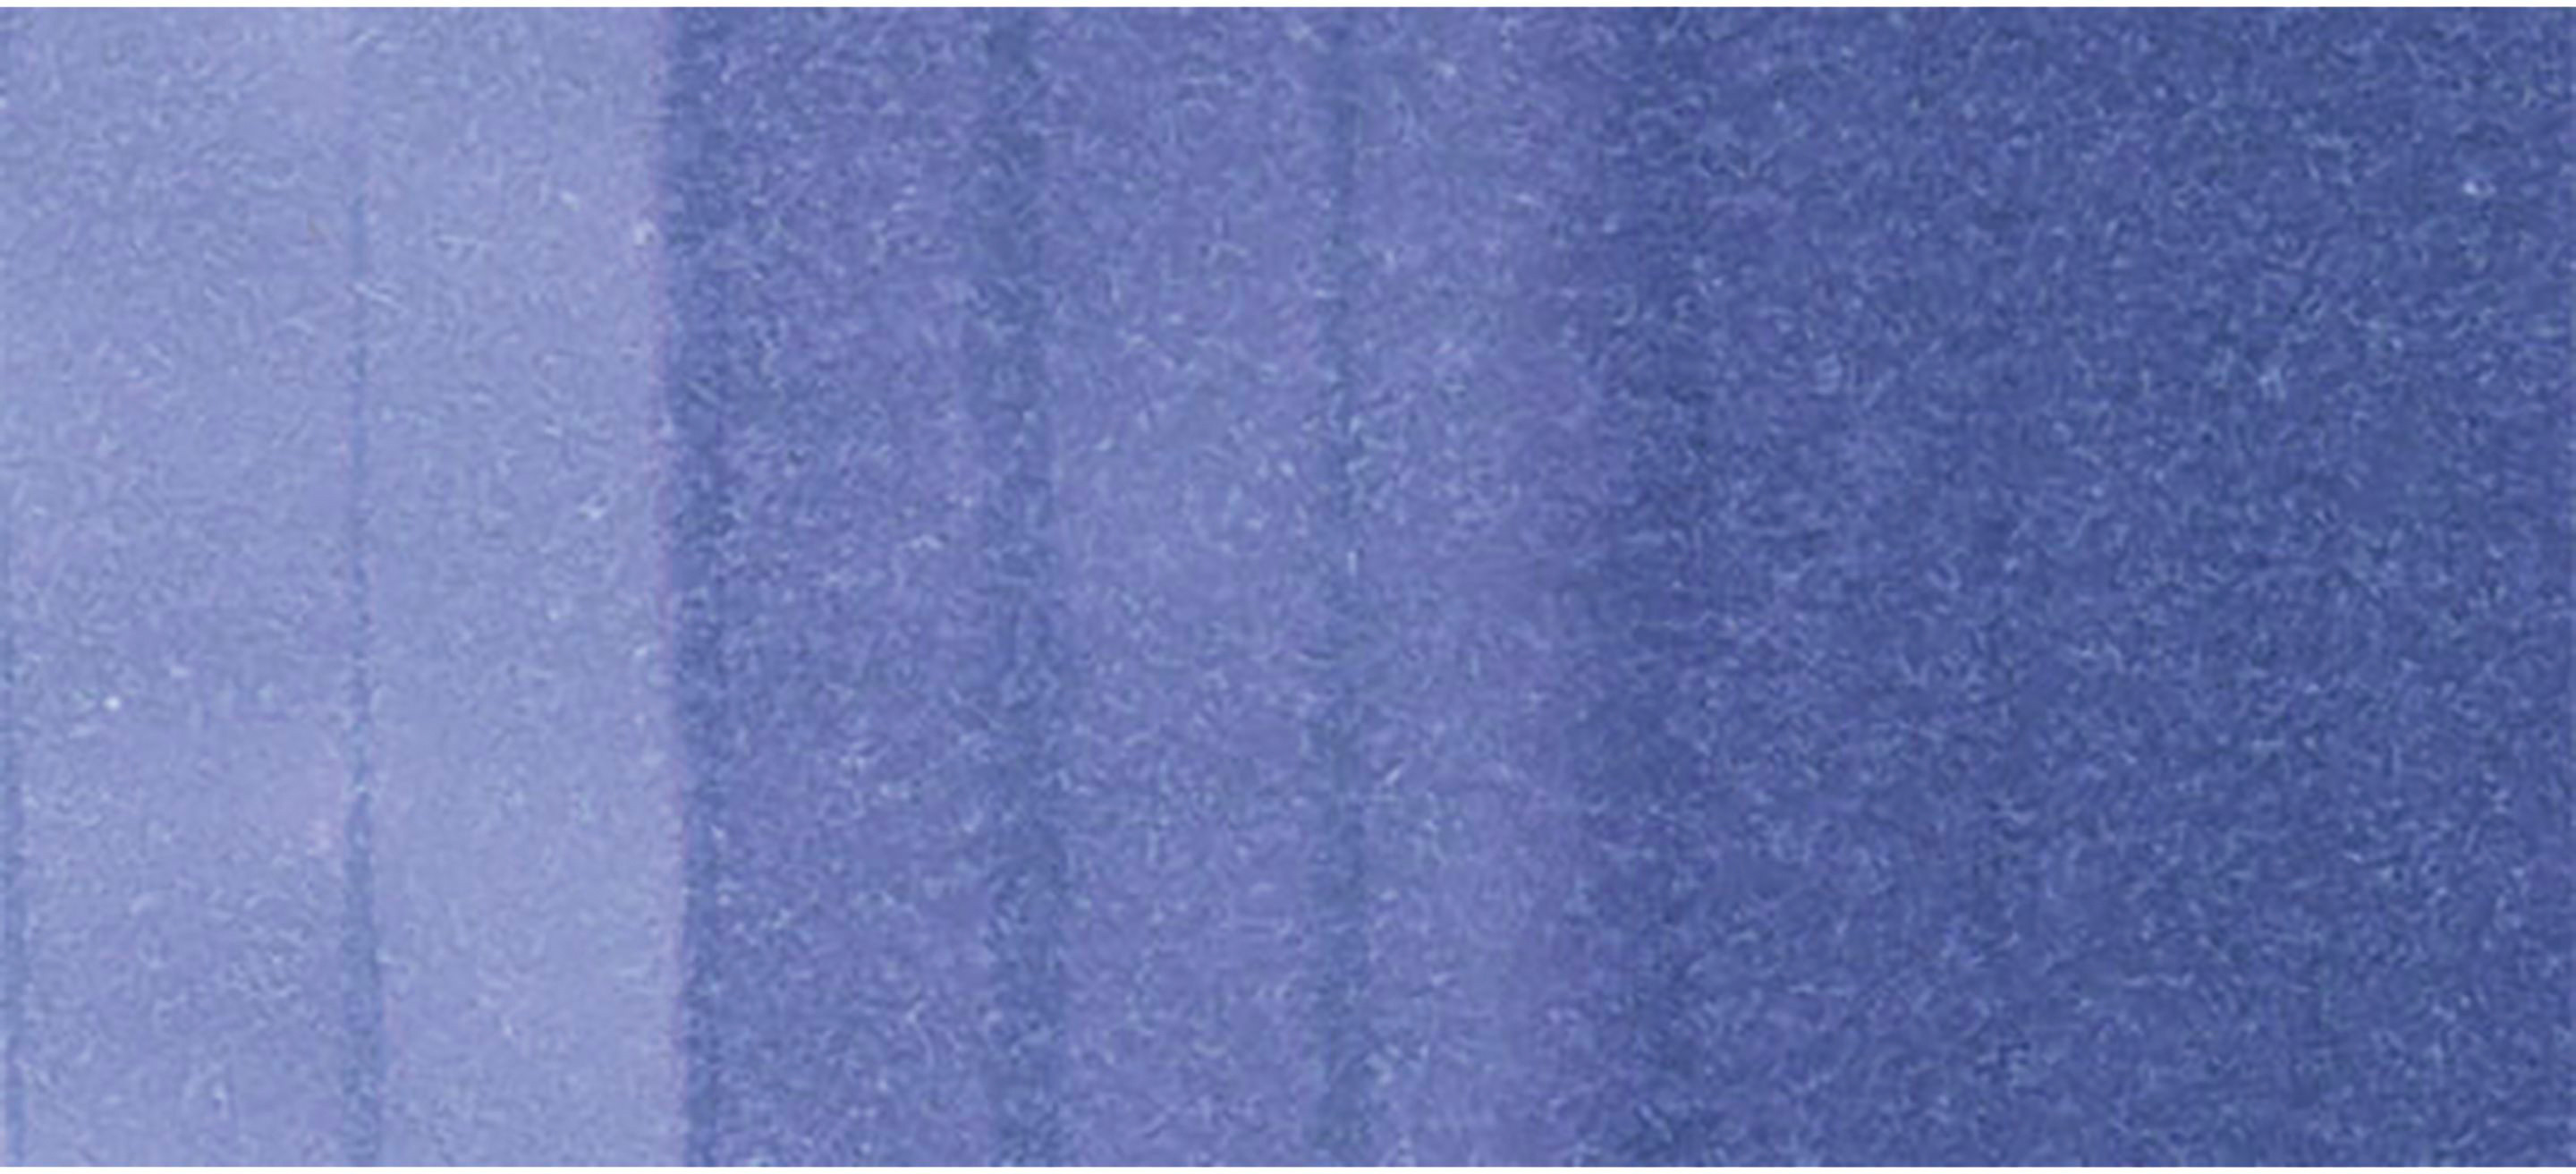 COPIC Marker Sketch 21075228 B45 - Smoky Blue